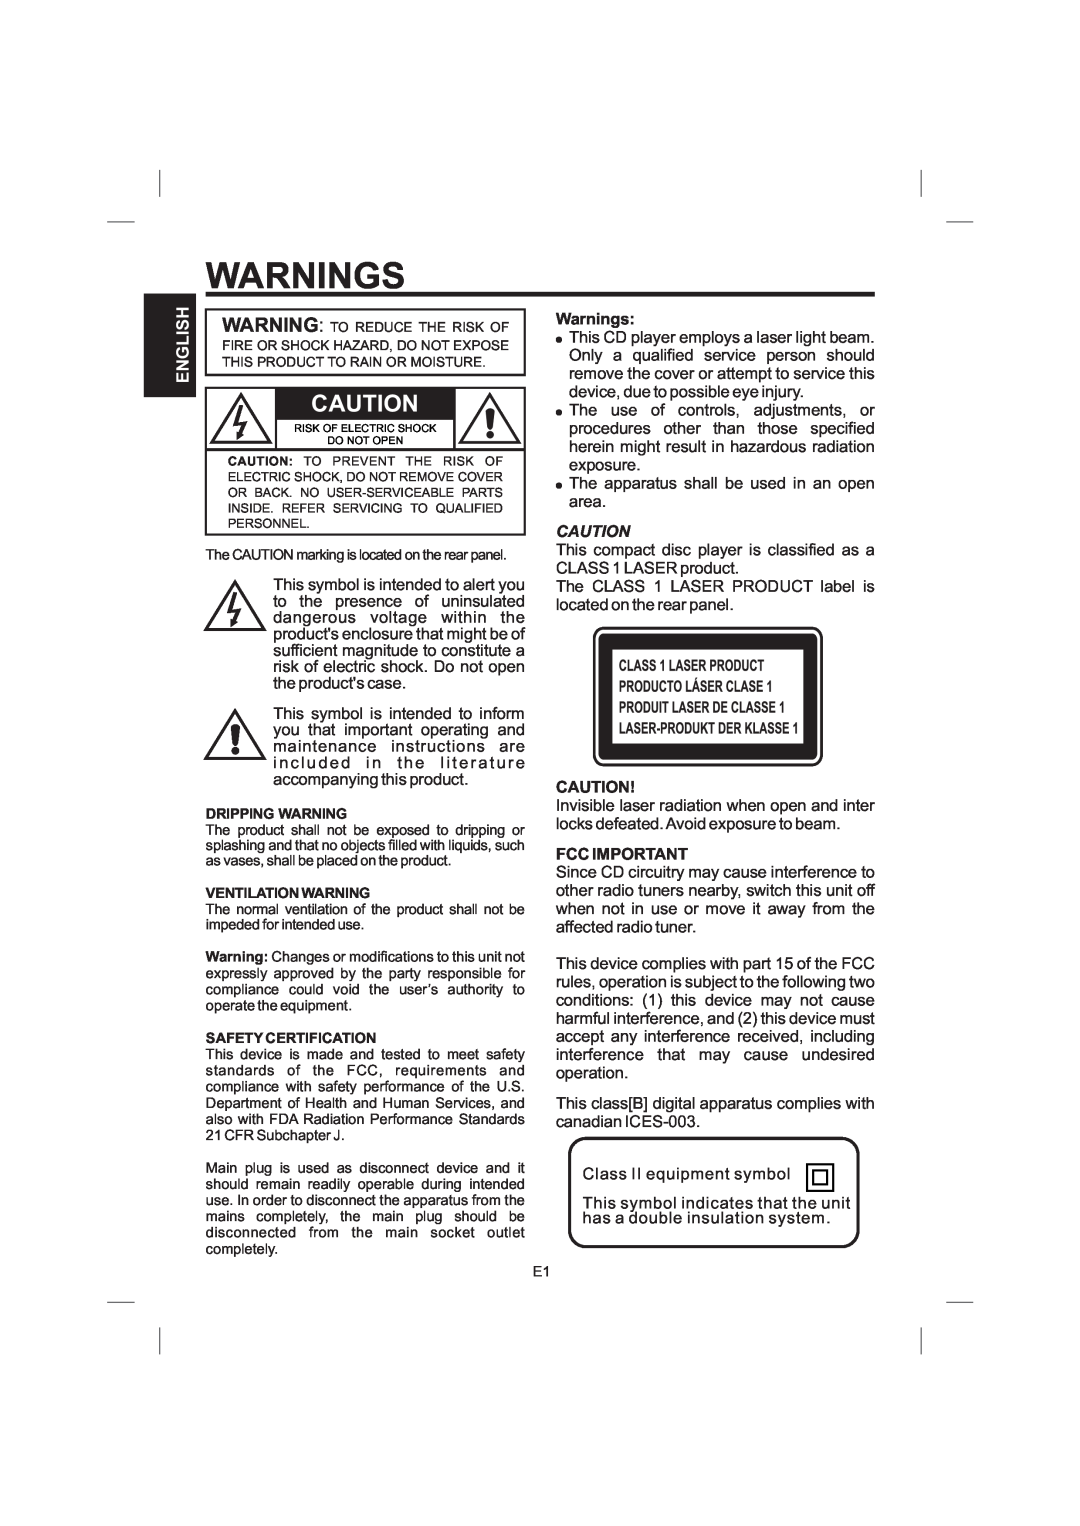 The Singing Machine STVG-559 manual Warnings, English, Fcc Important 